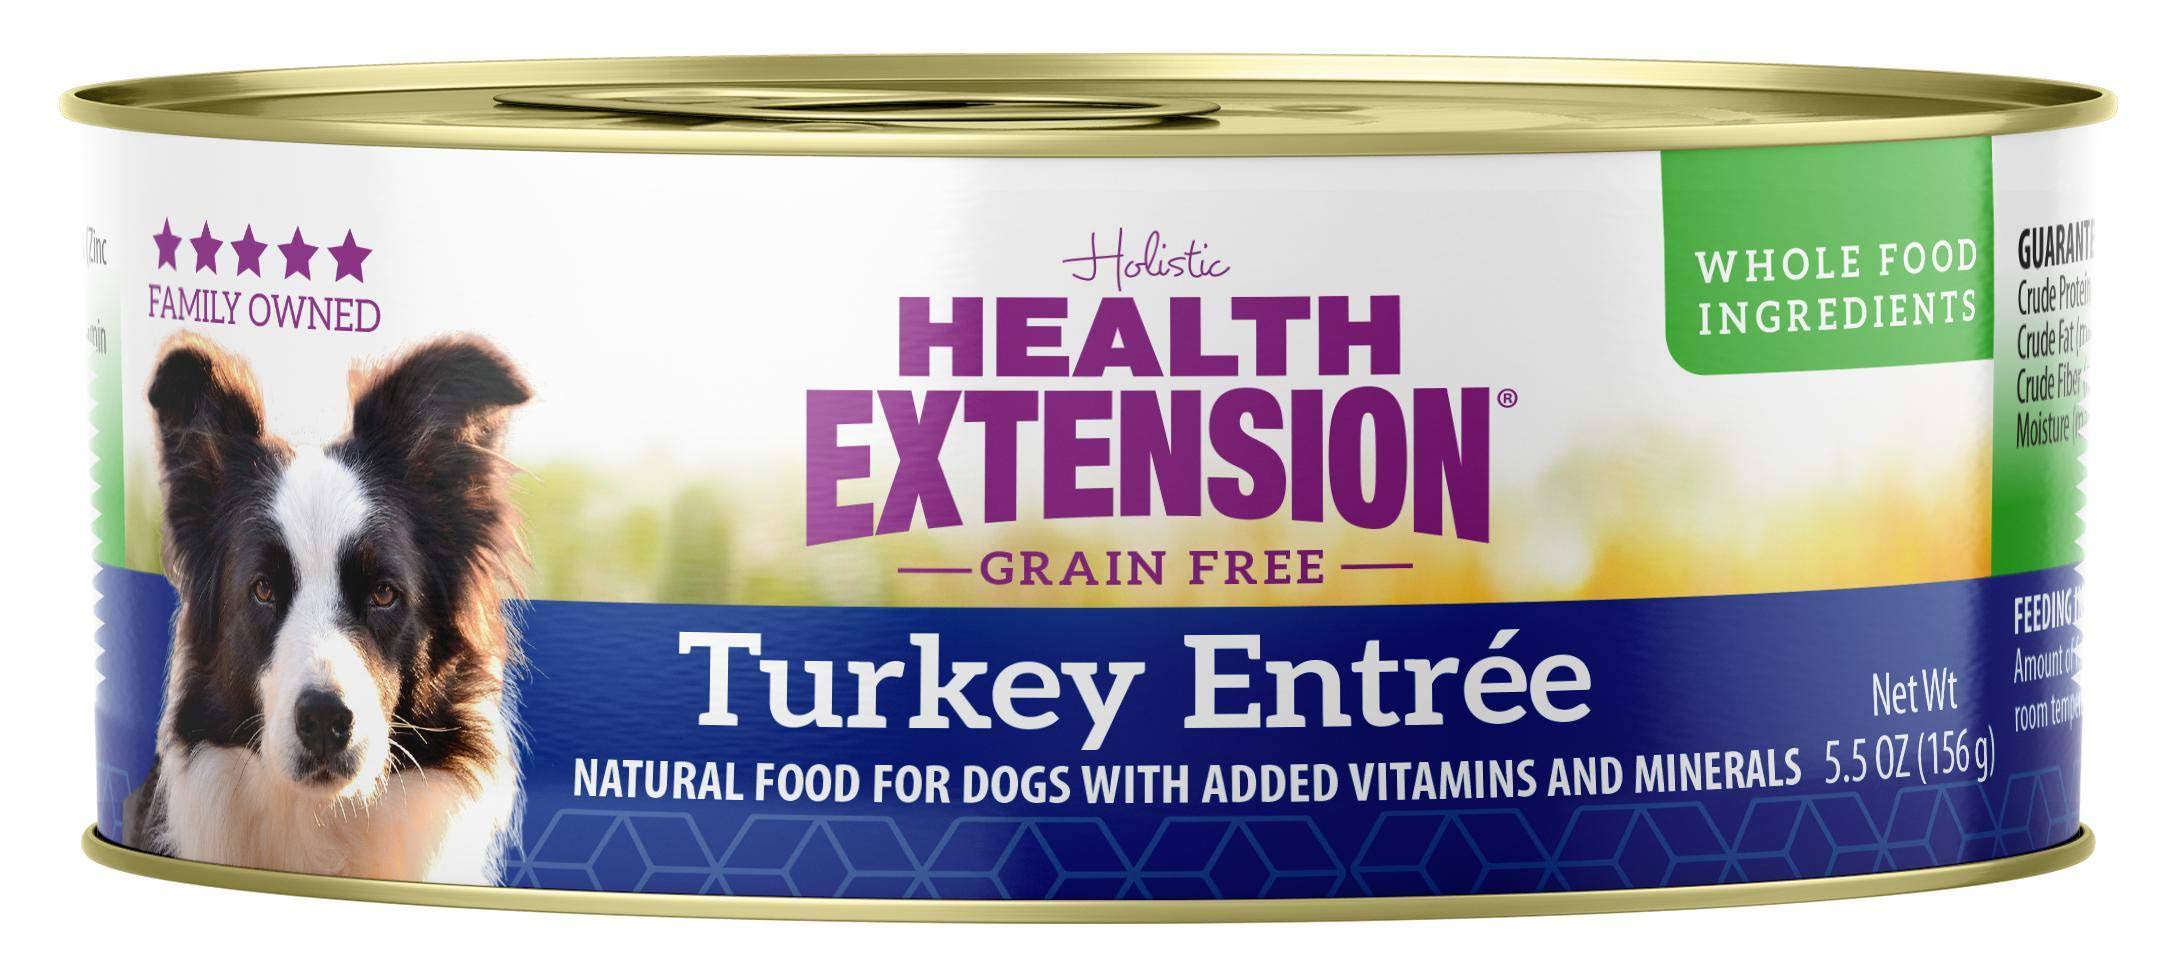 Health Extension Dog Food - Turkey Entree, 5.5oz